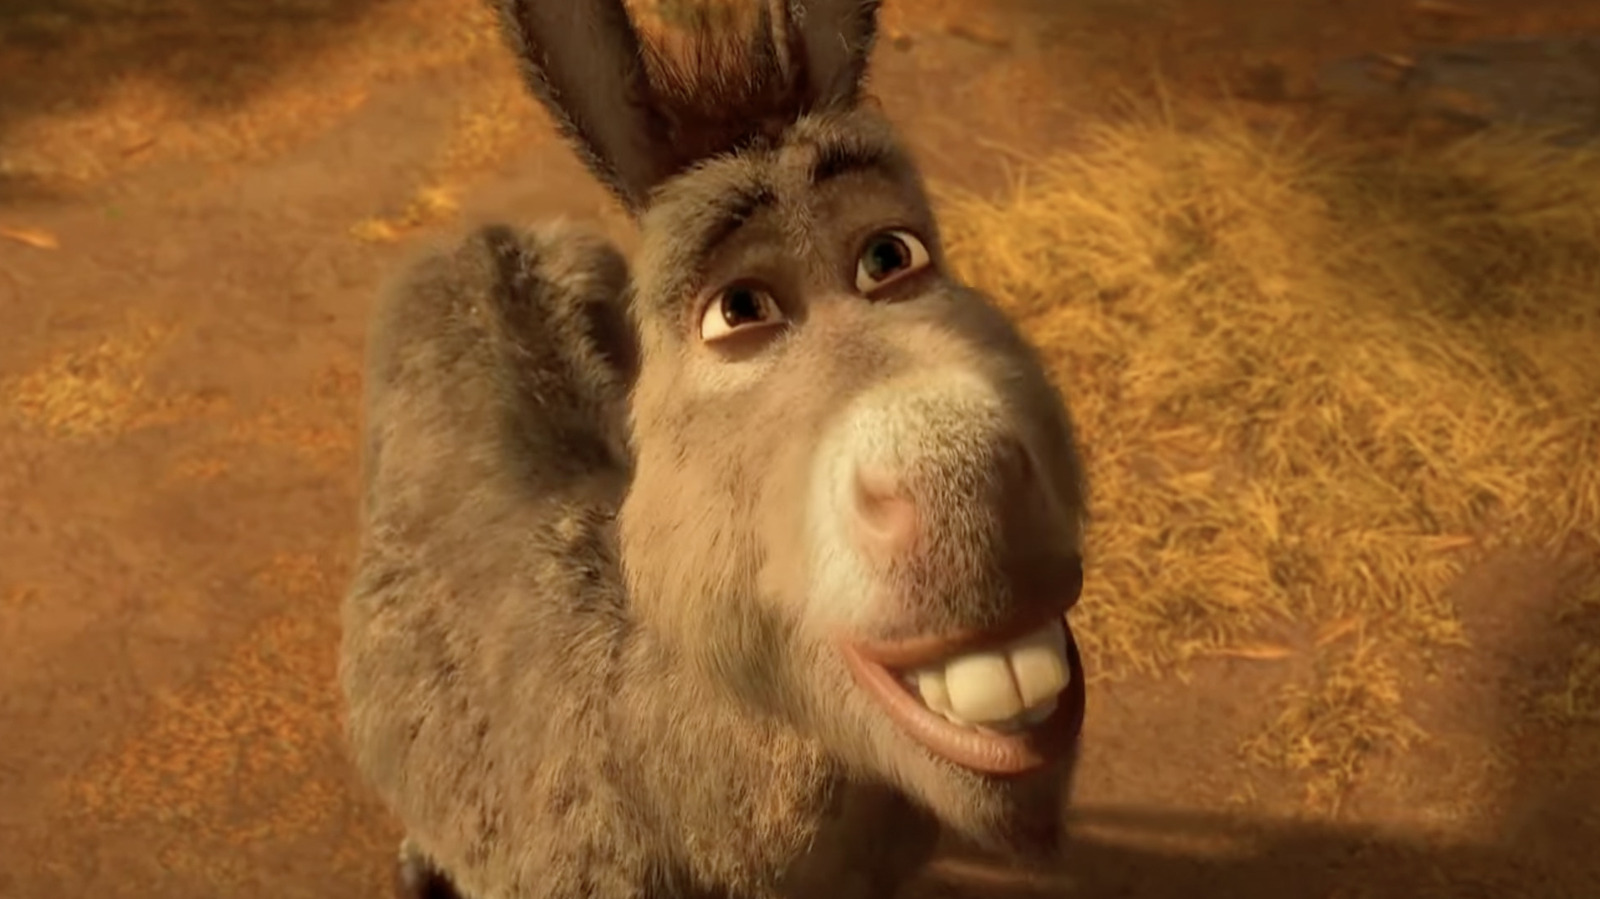 shrek and donkey funny quotes